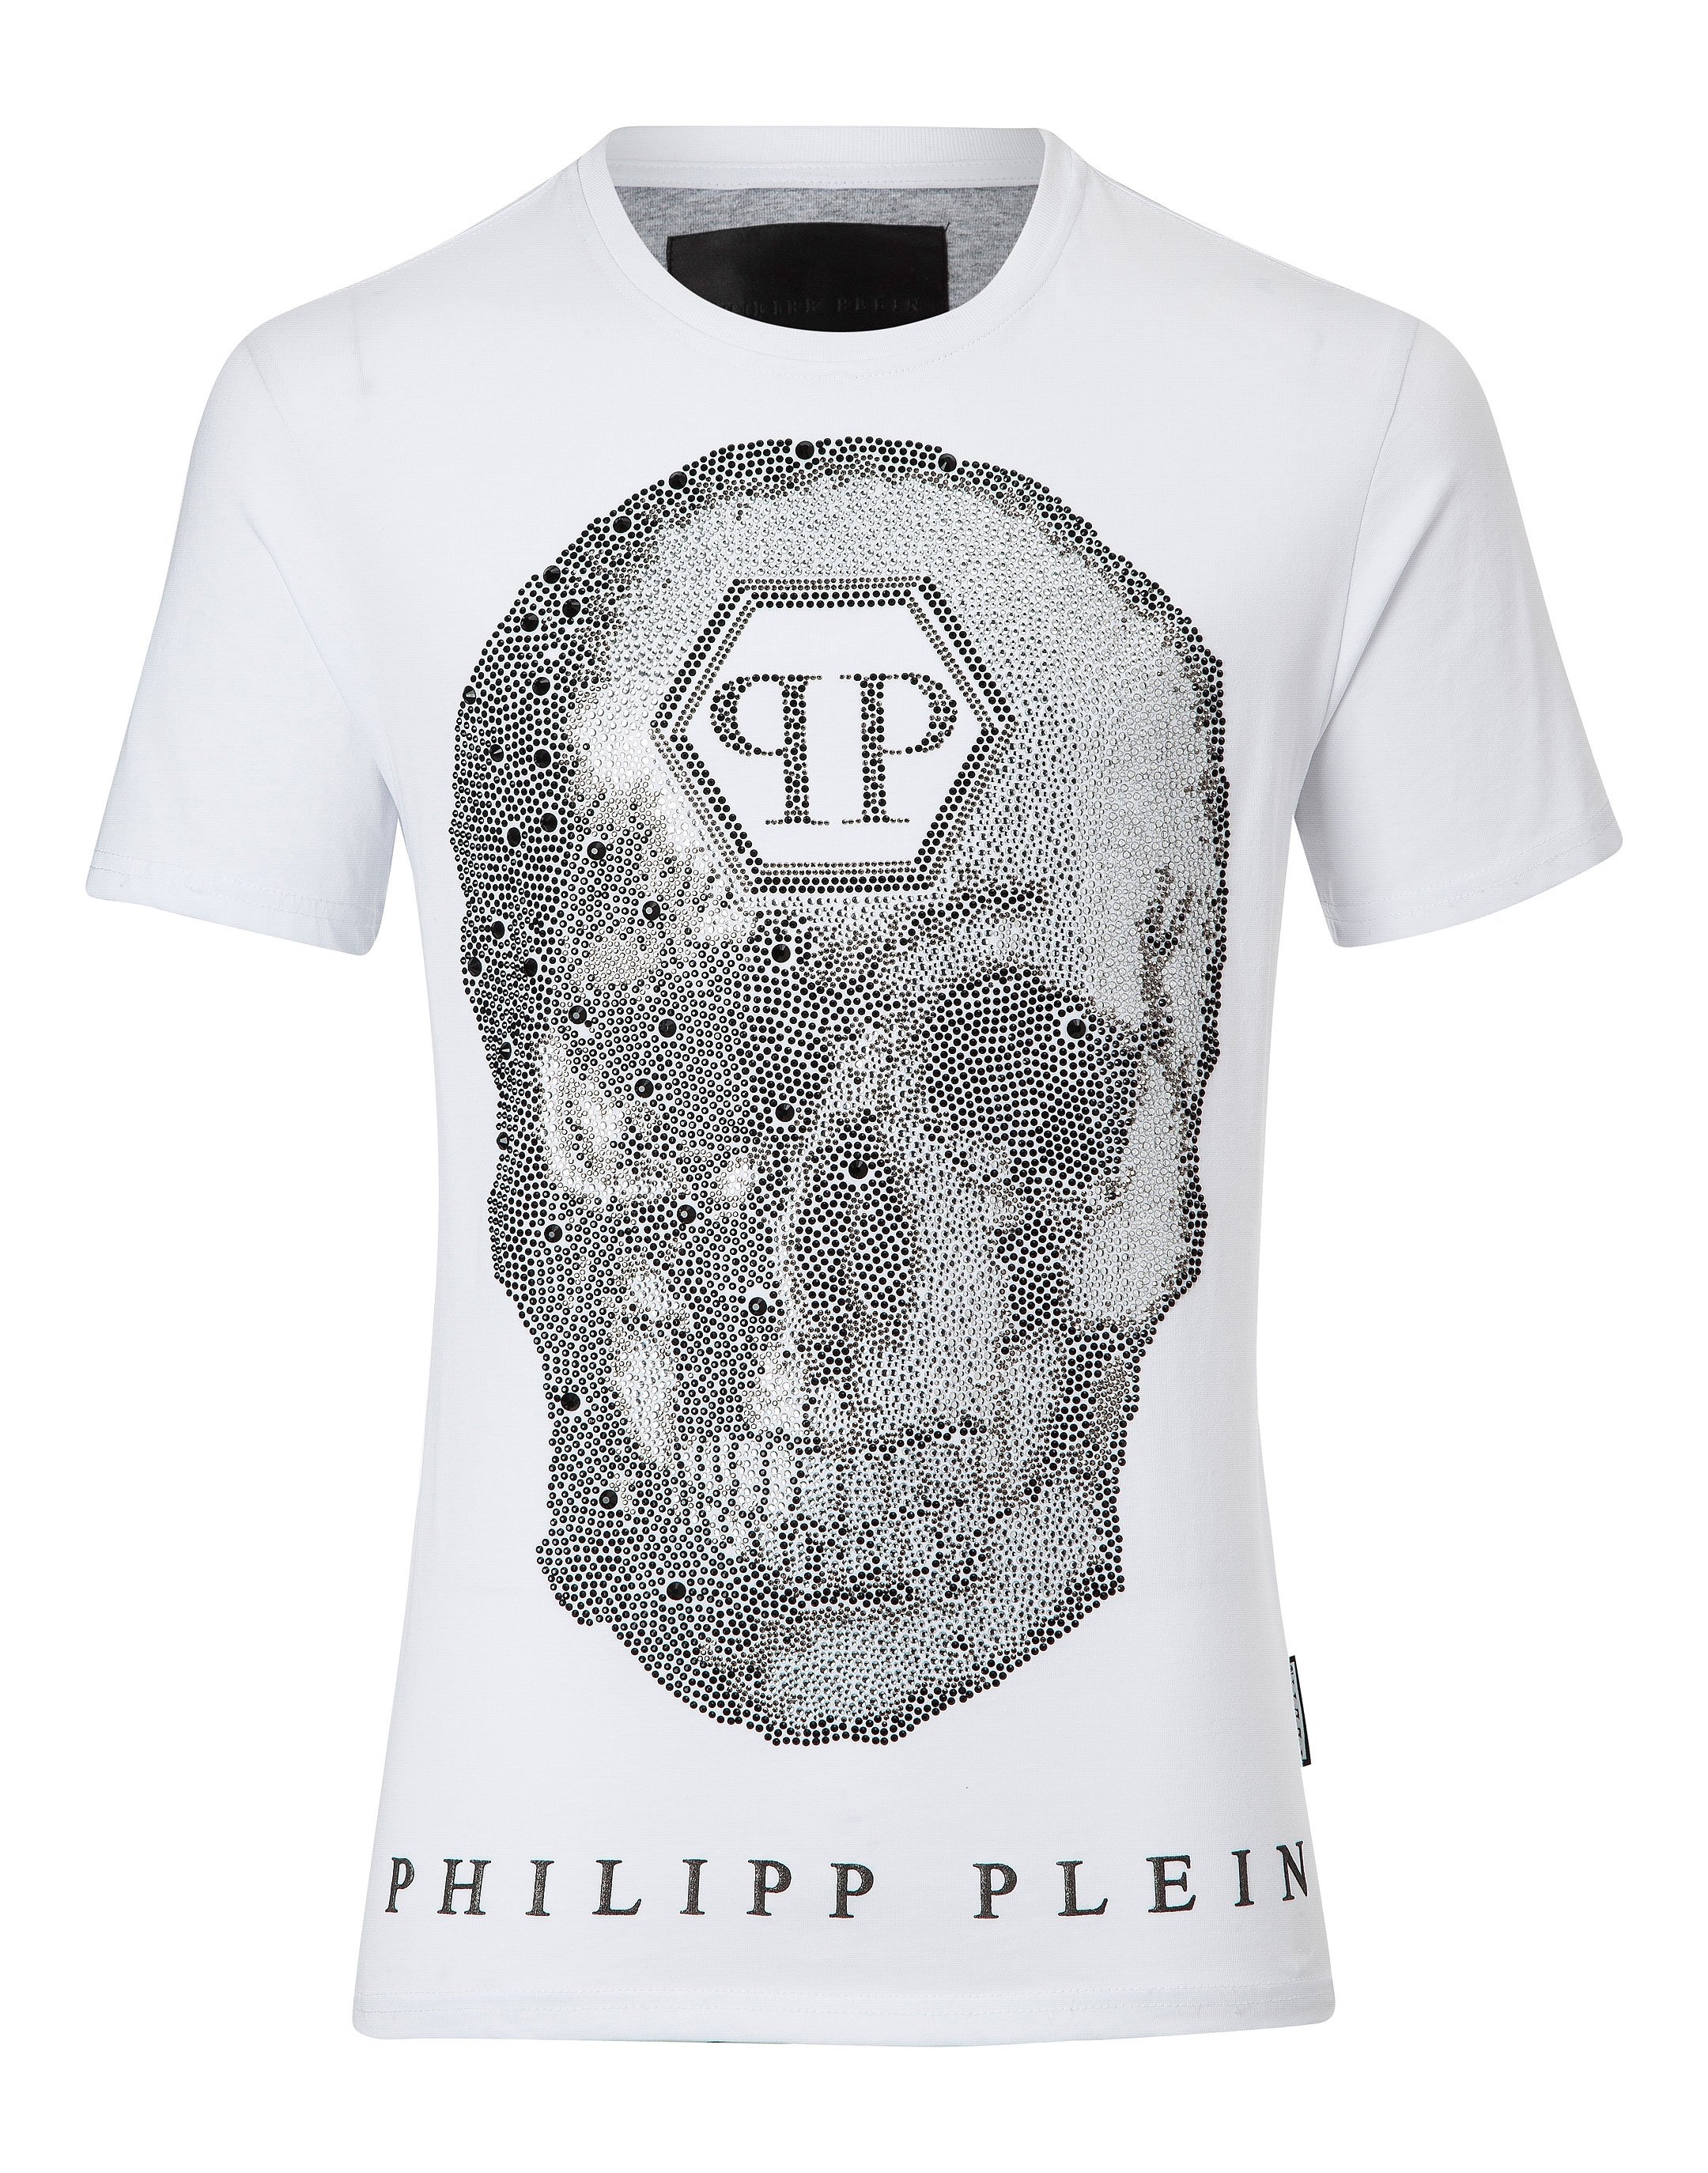 Филип плейн сайт. Philipp plein t Shirt. Филип Плейн футболка с черепом. Белая футболка Филип Плейн. Philipp plein t-Shirt Round Neck SS.